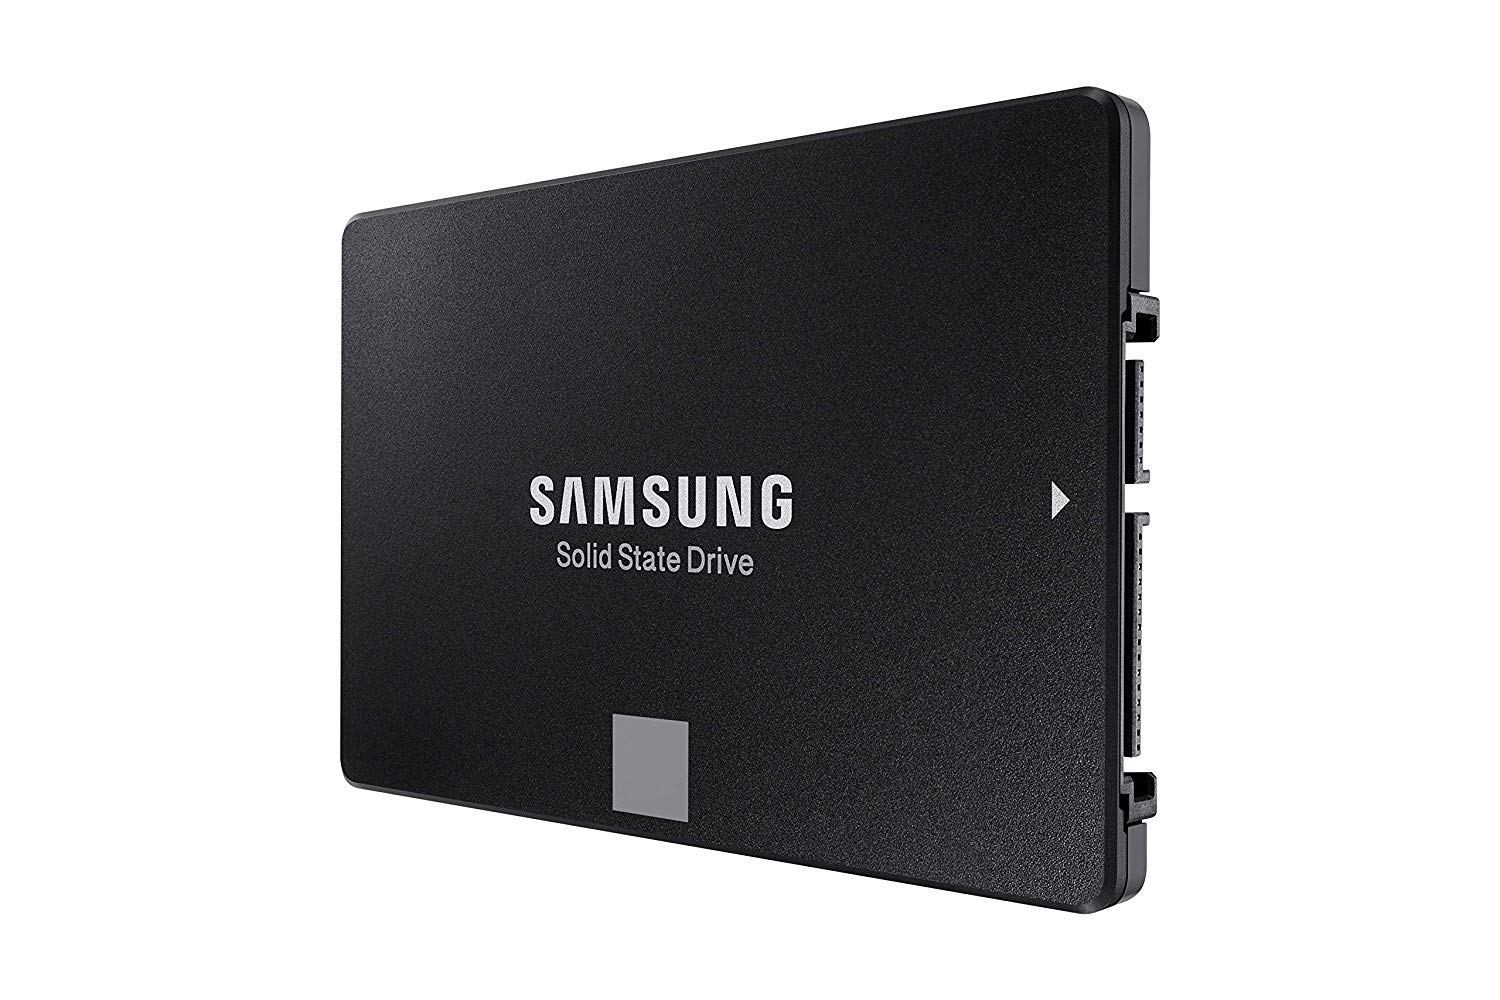 Samsung ssd 860 evo compatibility